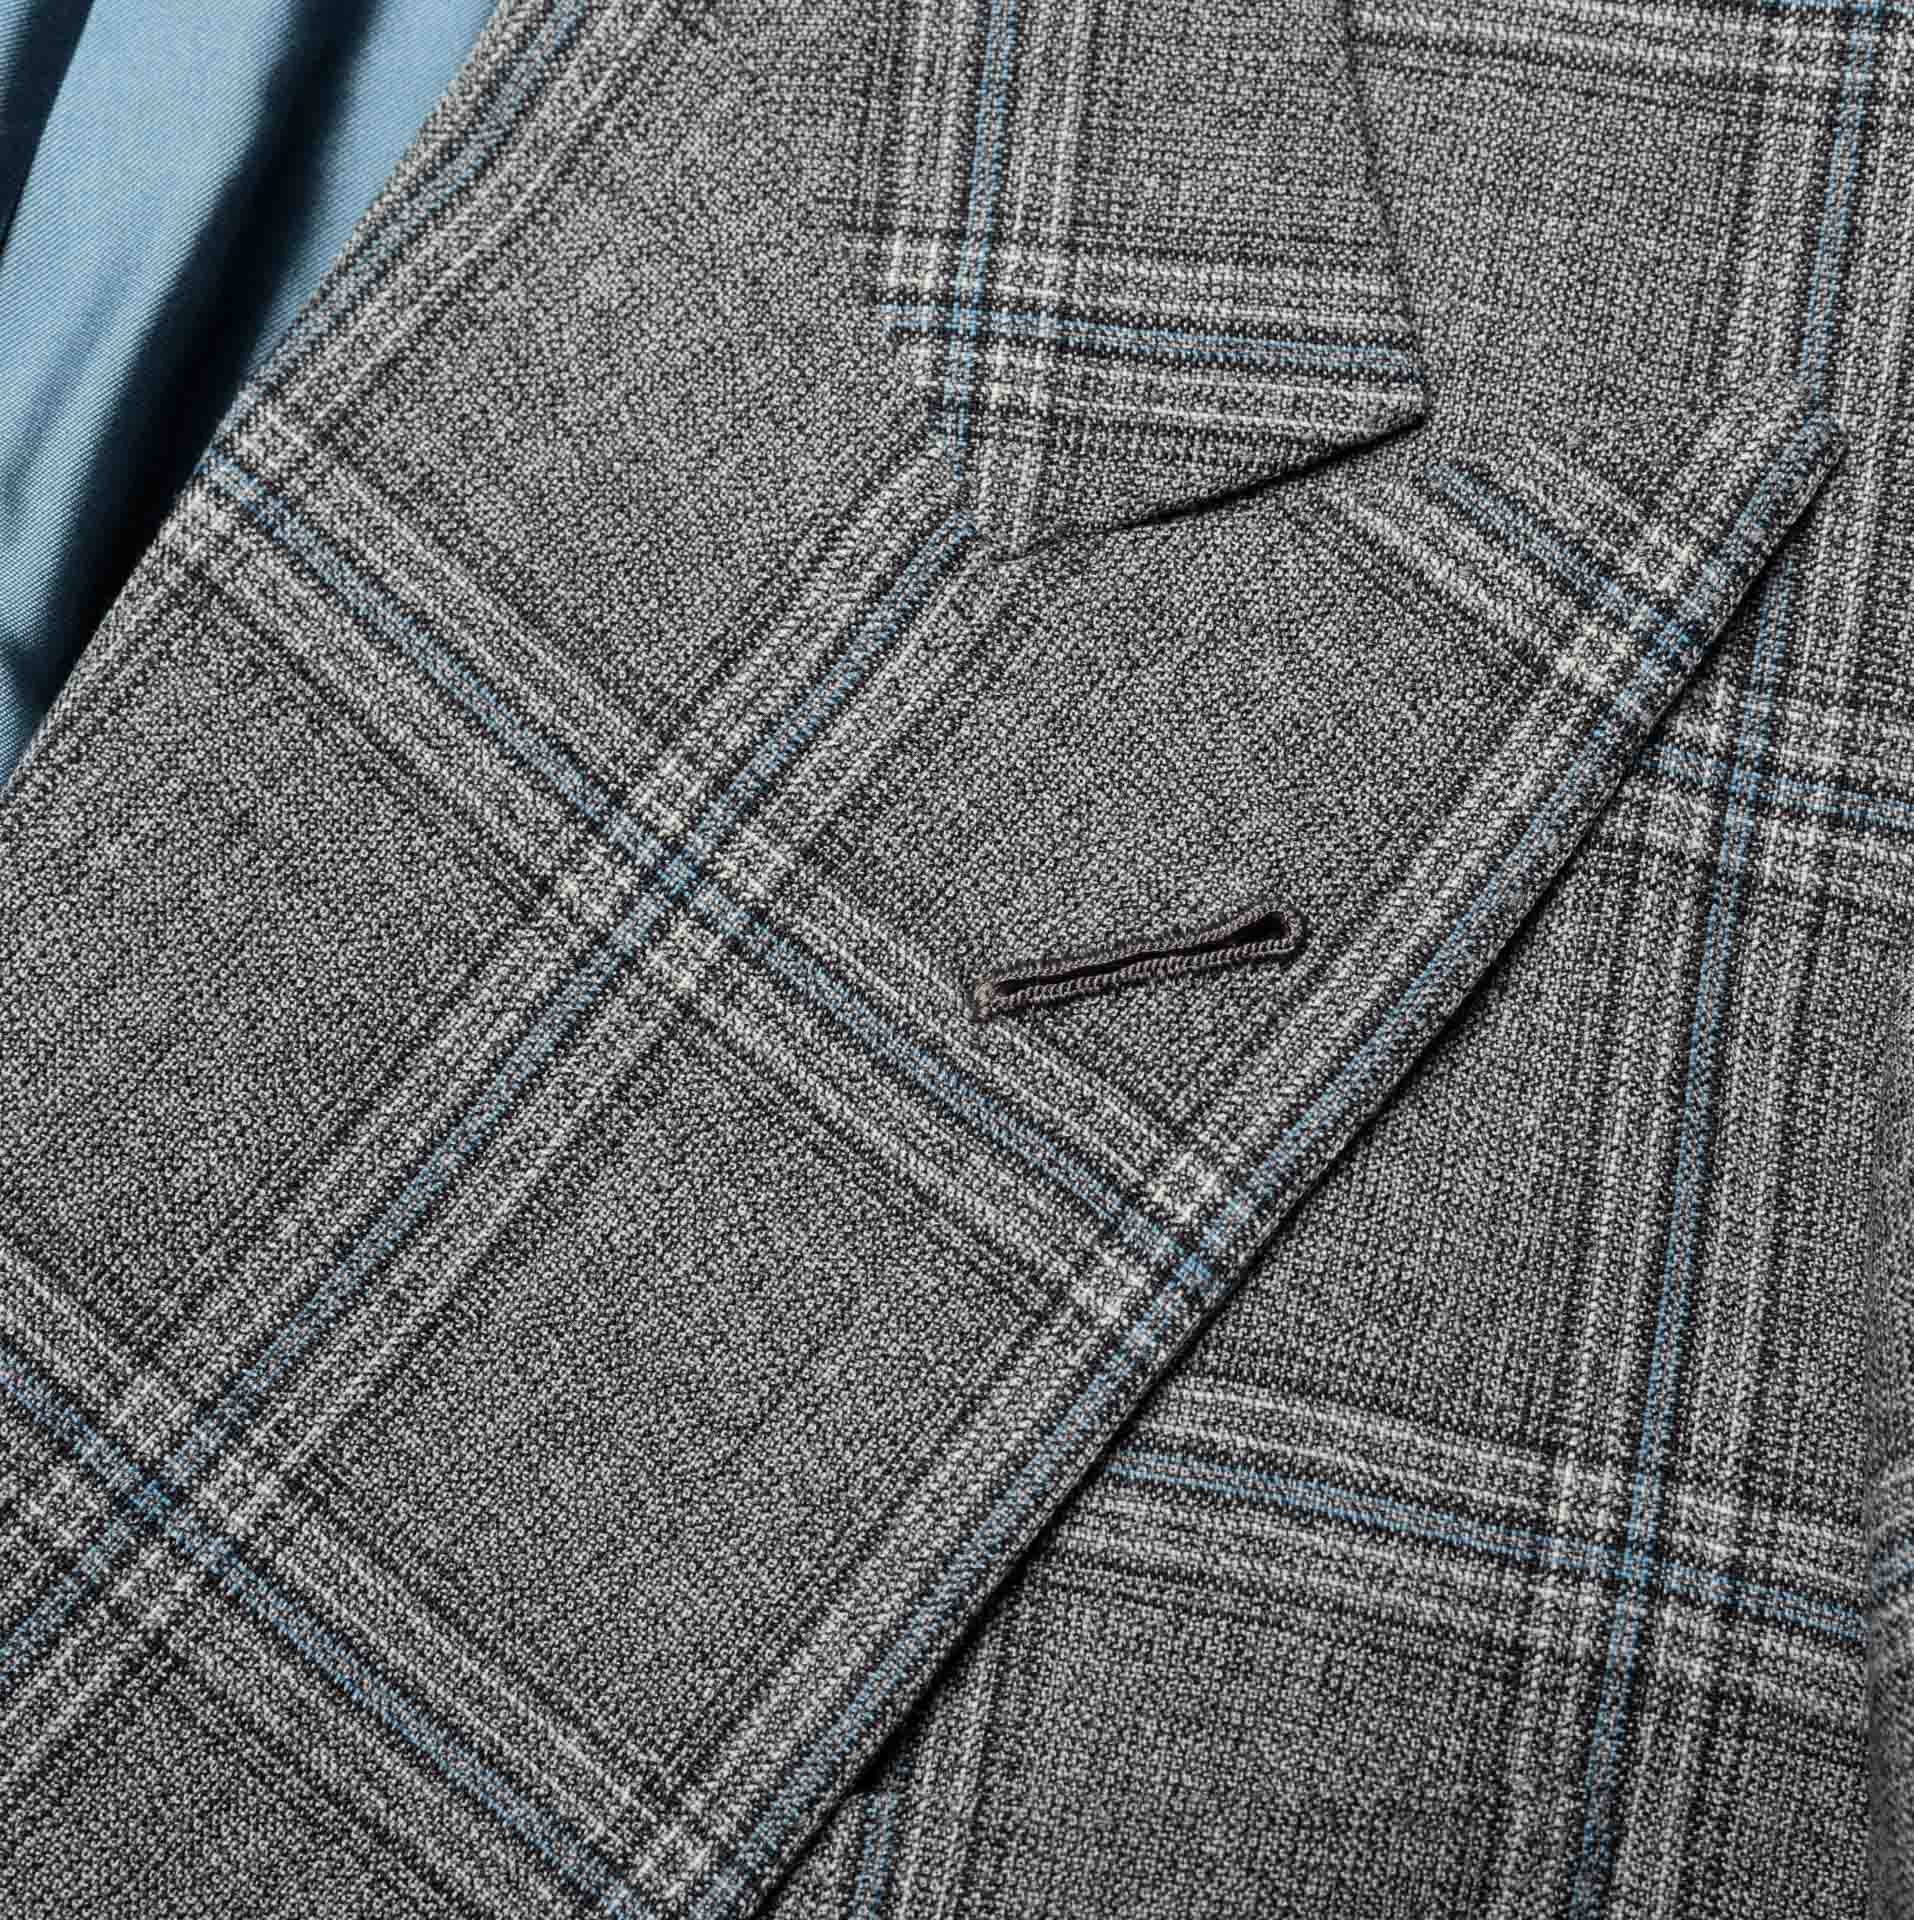 RUBINACCI LH Bespoke Hand Made Gray Plaid Wool DB Blazer Jacket EU 50 NEW US 40 RUBINACCI